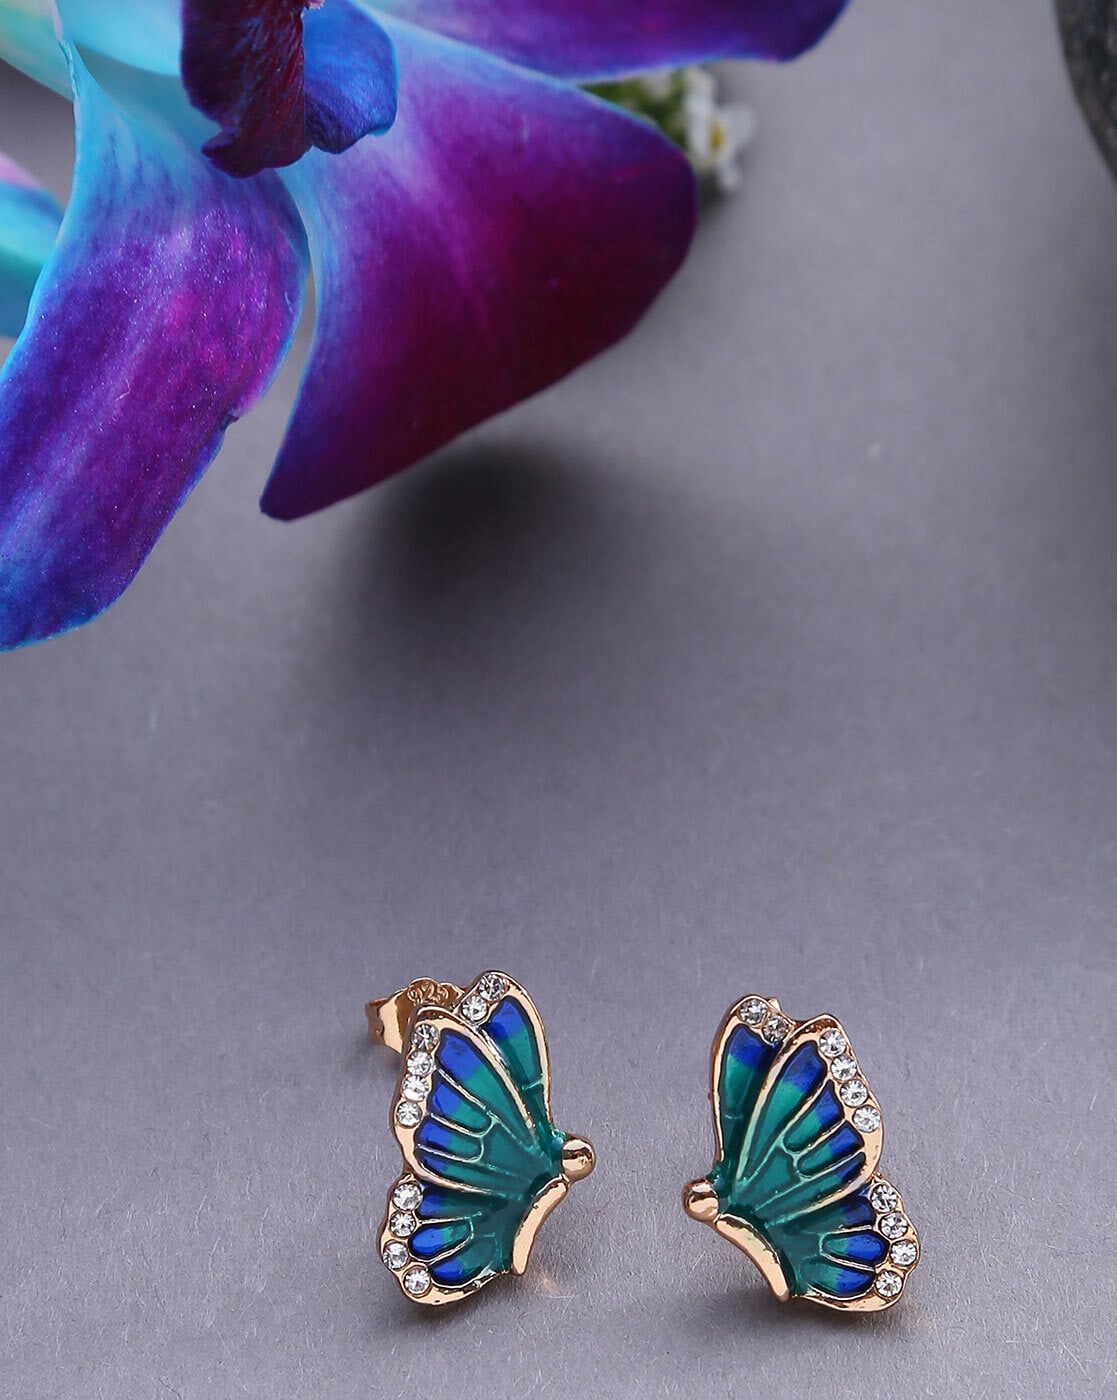 Blue Swirl Ulysses Butterfly Earrings By Martinis & Slippers